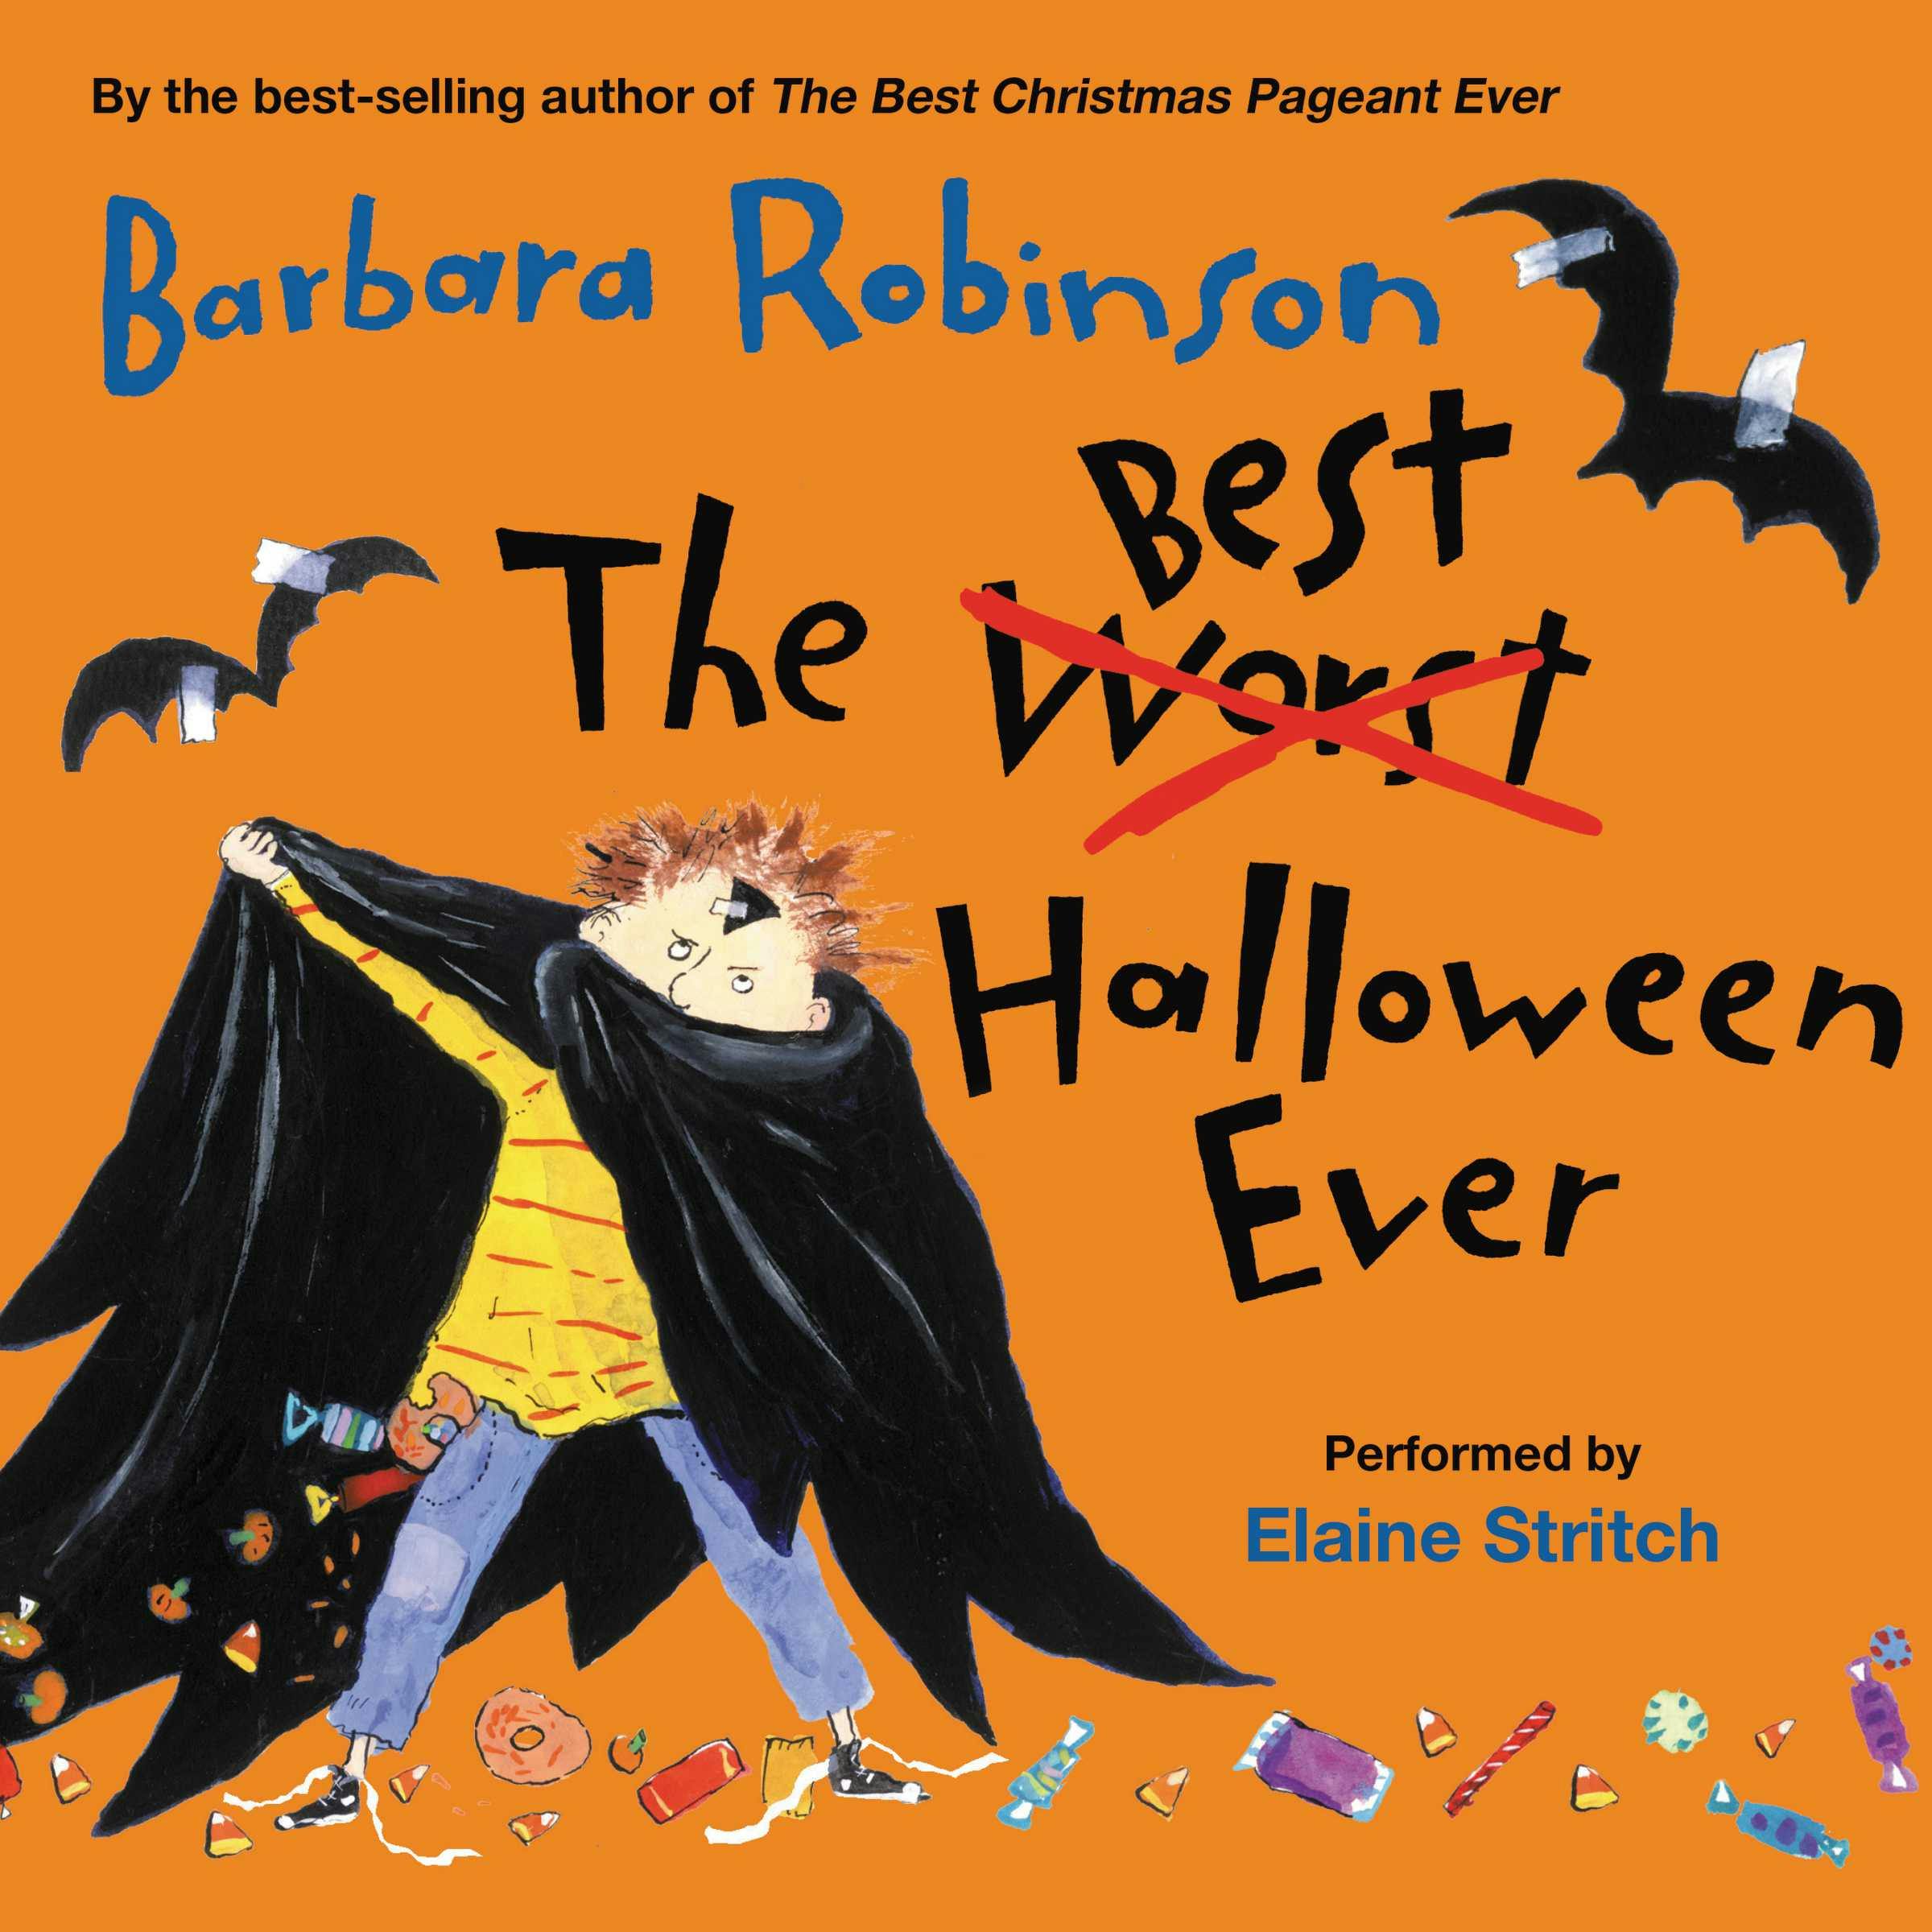 The Best Halloween Ever - Barbara Robinson